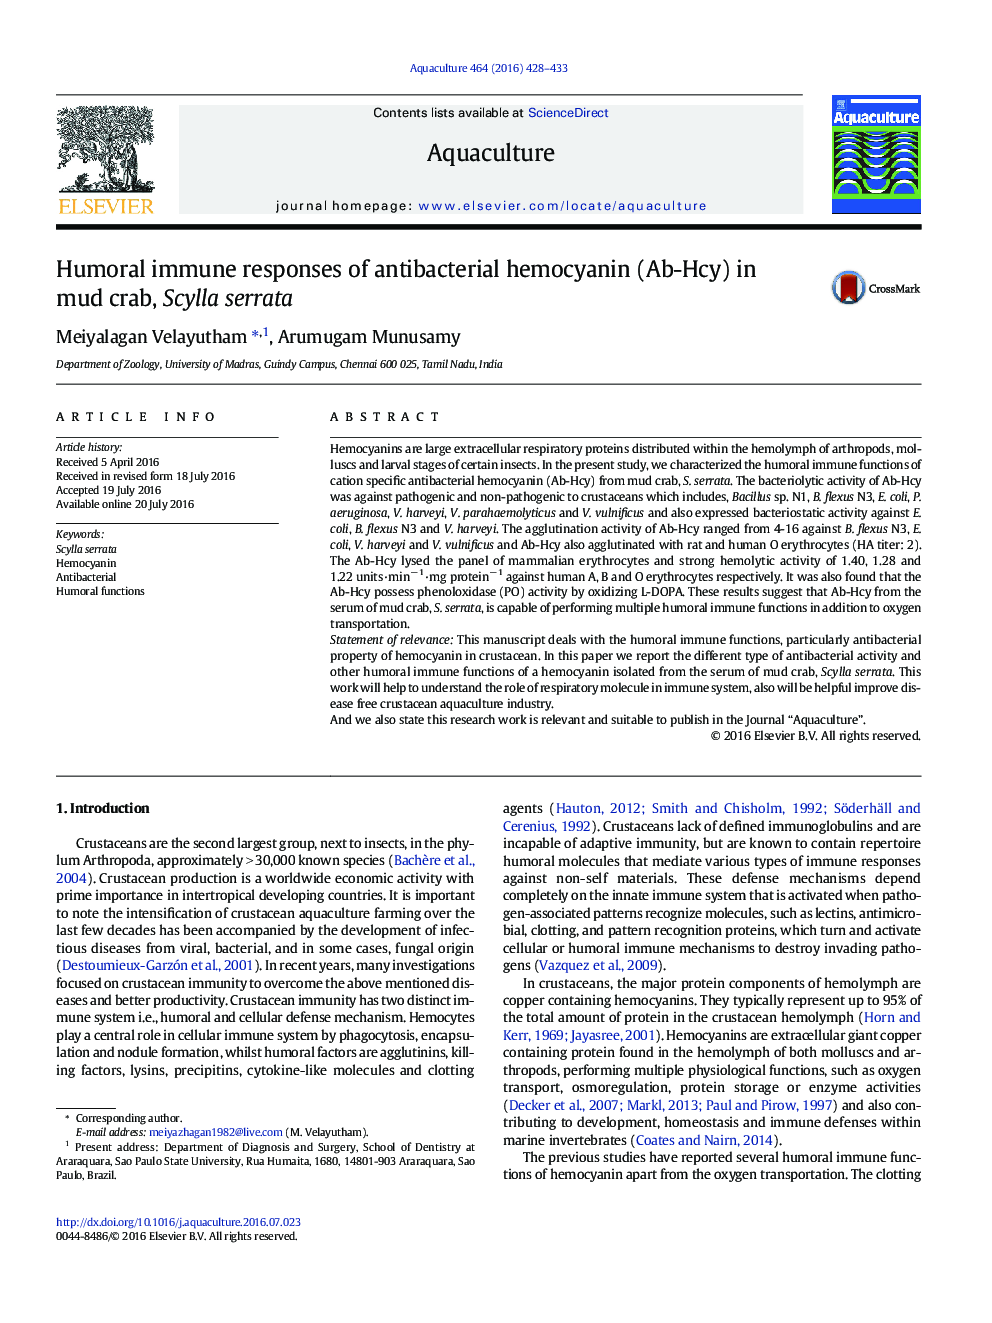 Humoral immune responses of antibacterial hemocyanin (Ab-Hcy) in mud crab, Scylla serrata